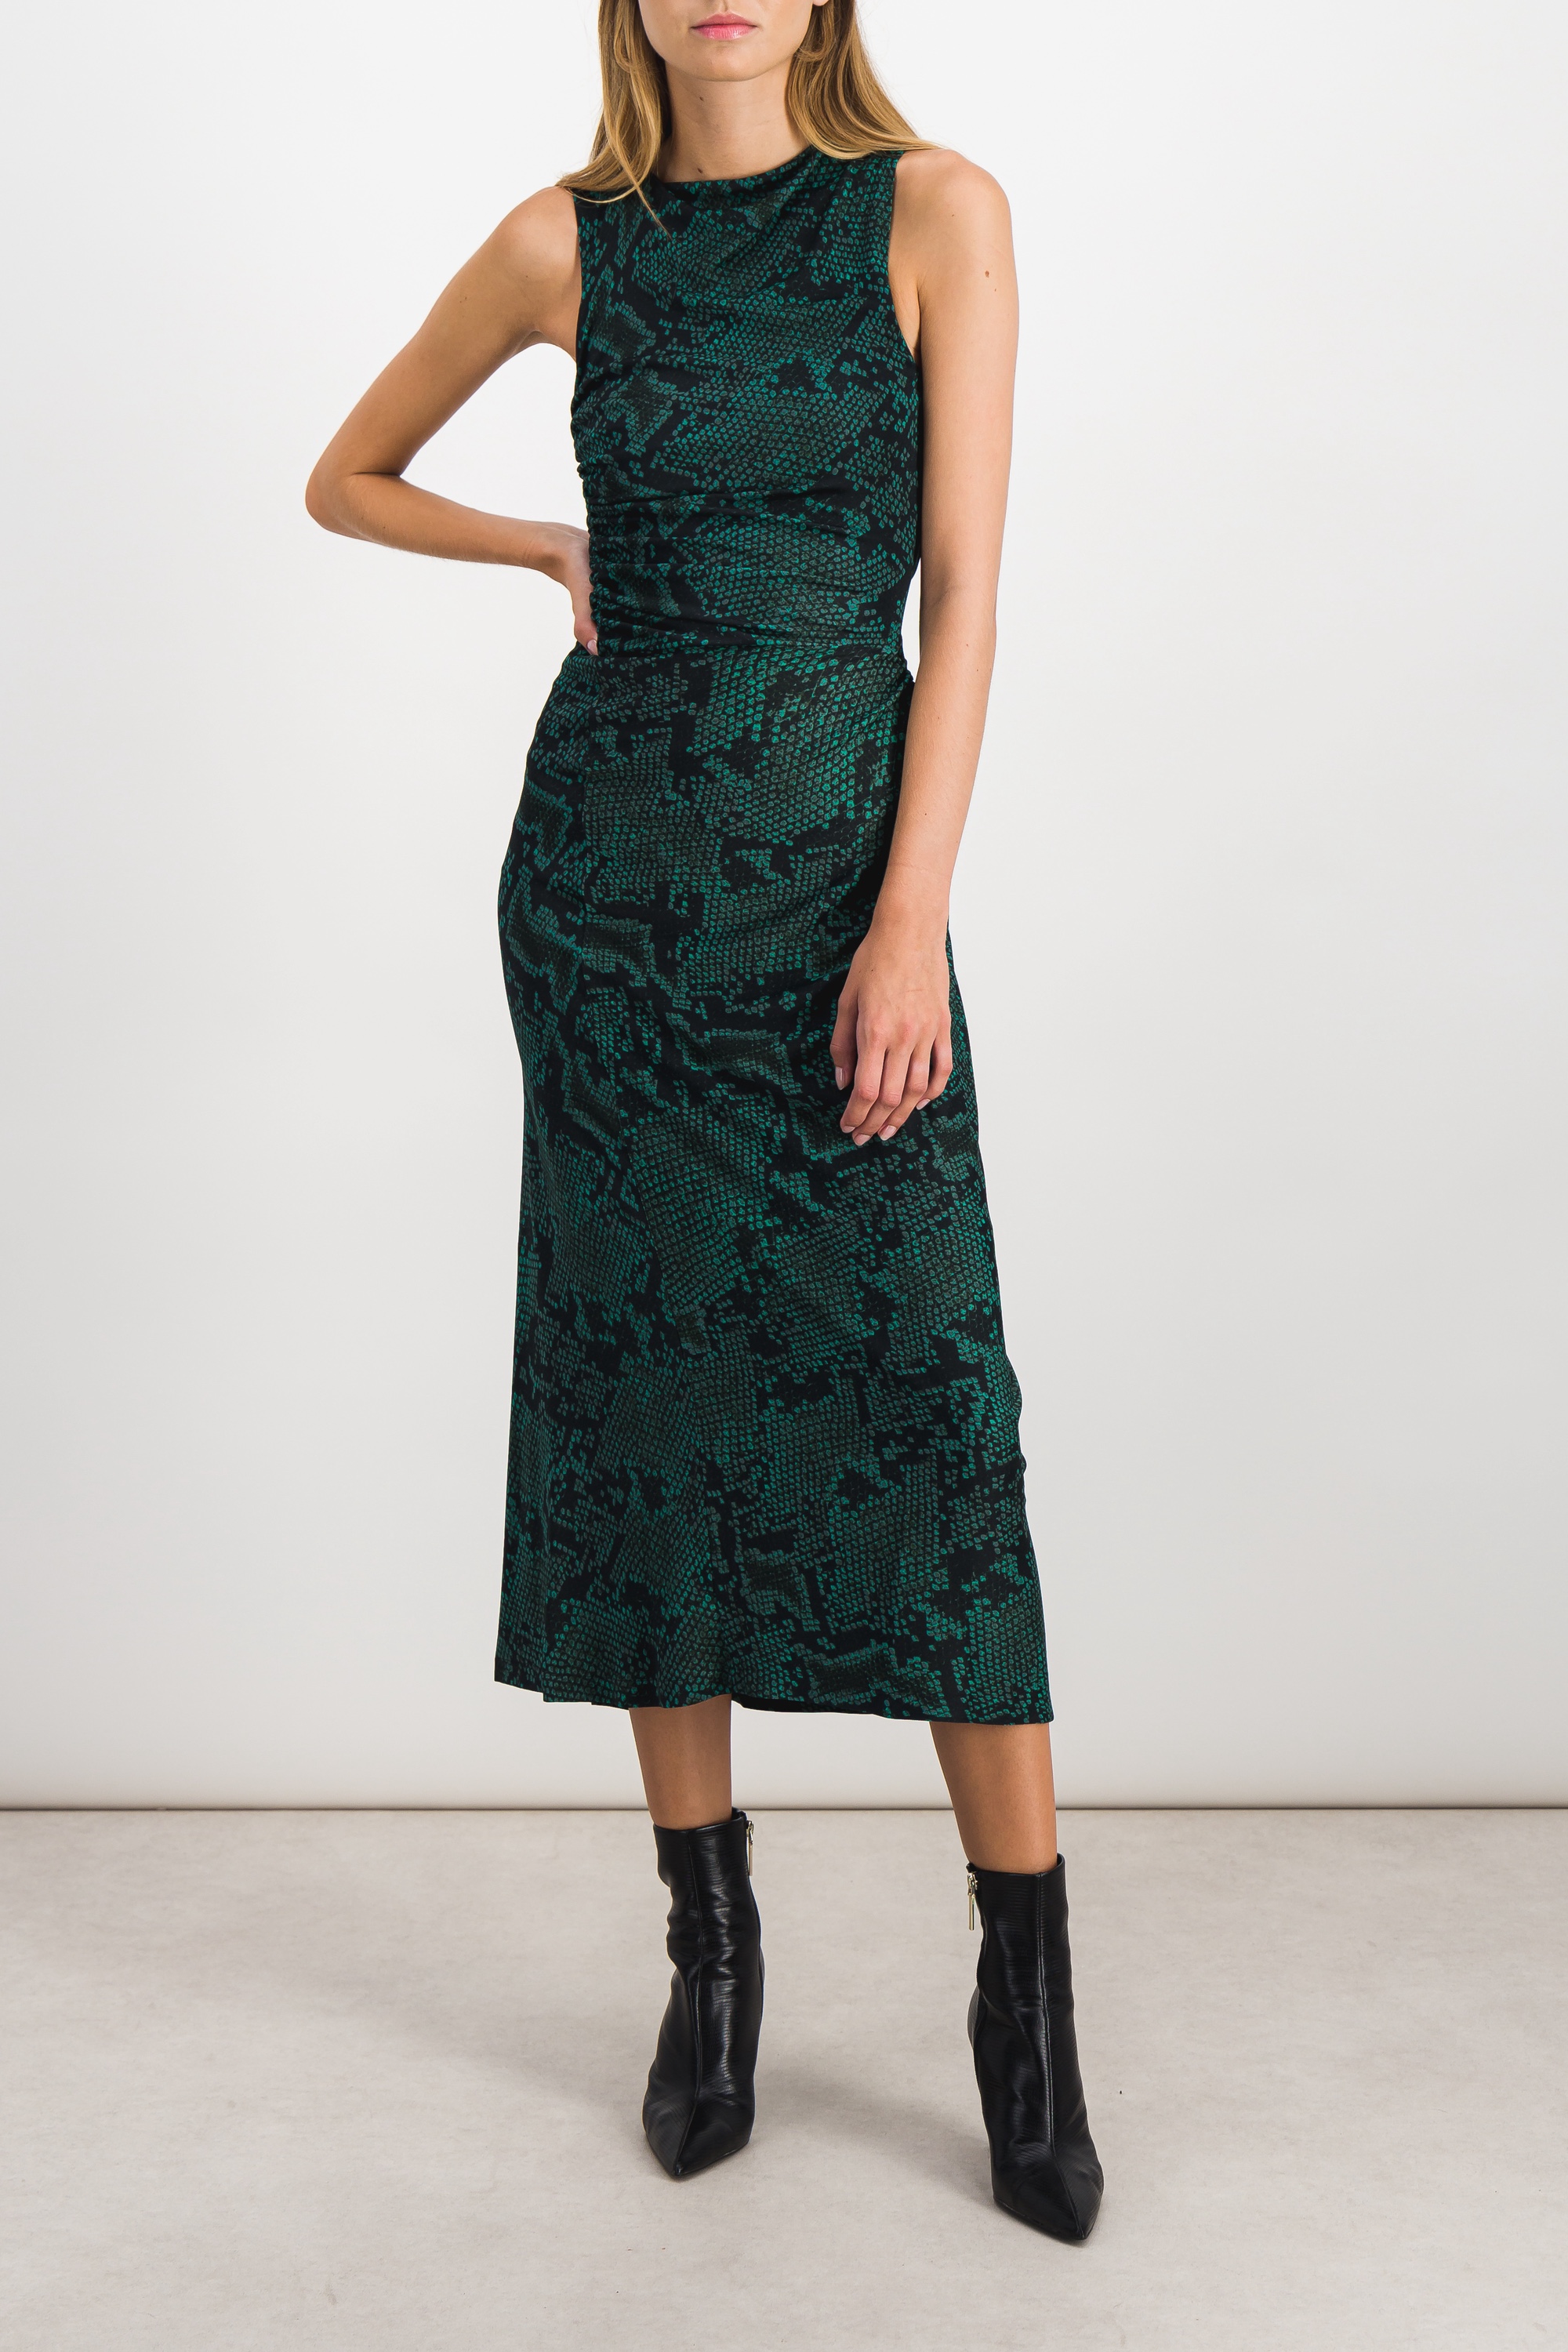 Atlein Asymmetric Green Snake Printed Sleeveless Draped Maxi Dress